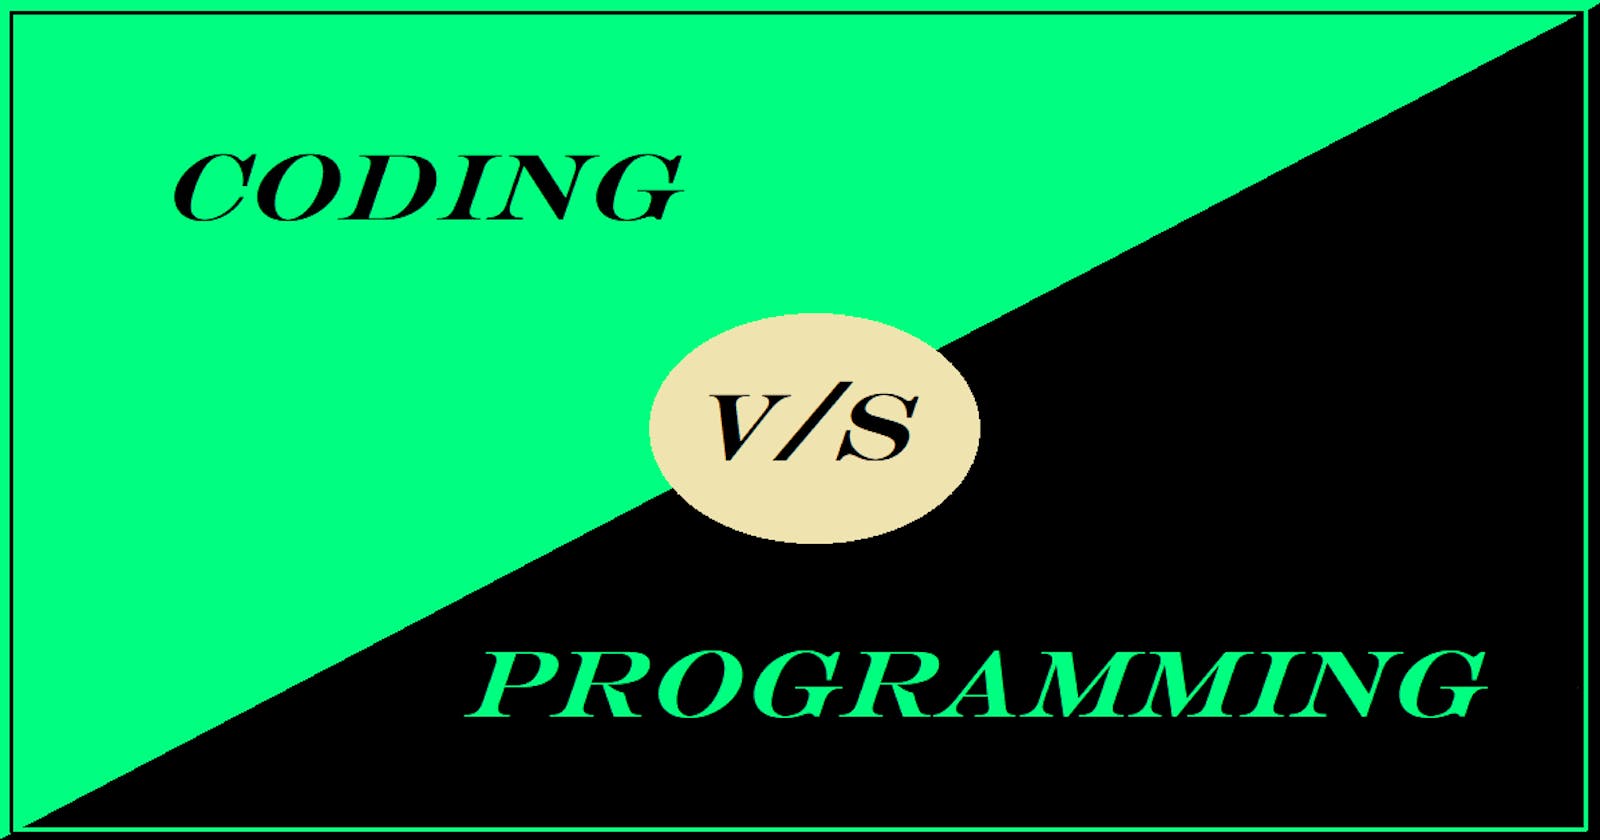 Coding v/s Programming